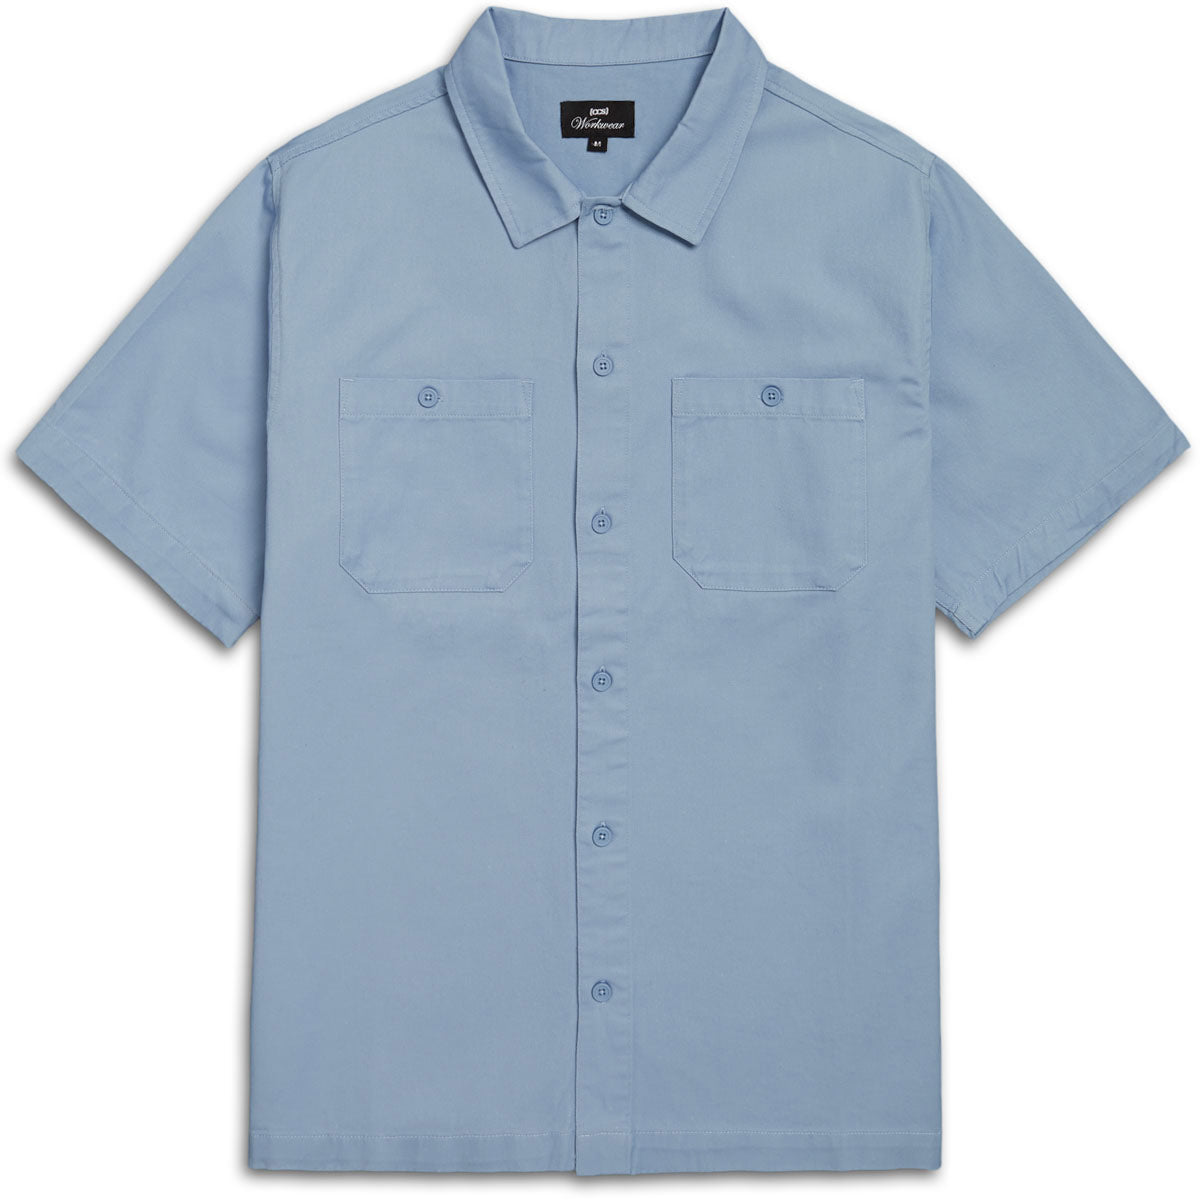 CCS Heavy Cotton Work Shirt - Light Blue image 1